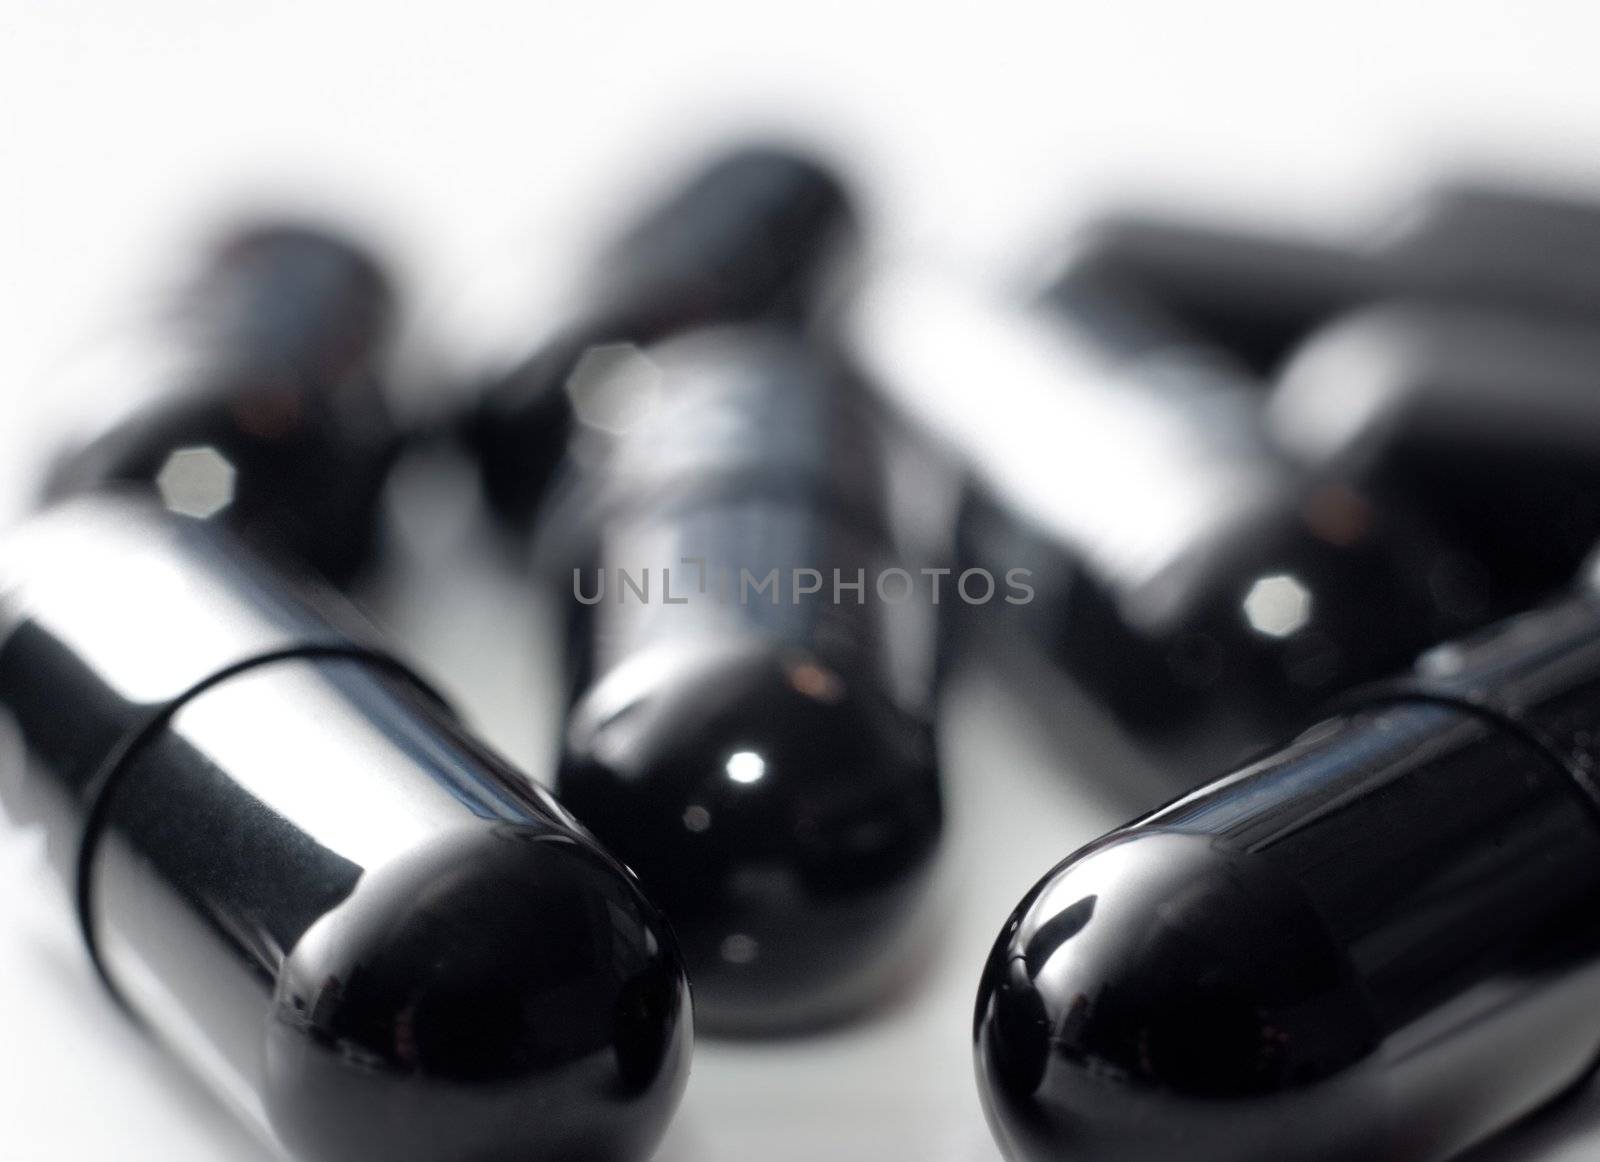 Macro of black capsules on white background